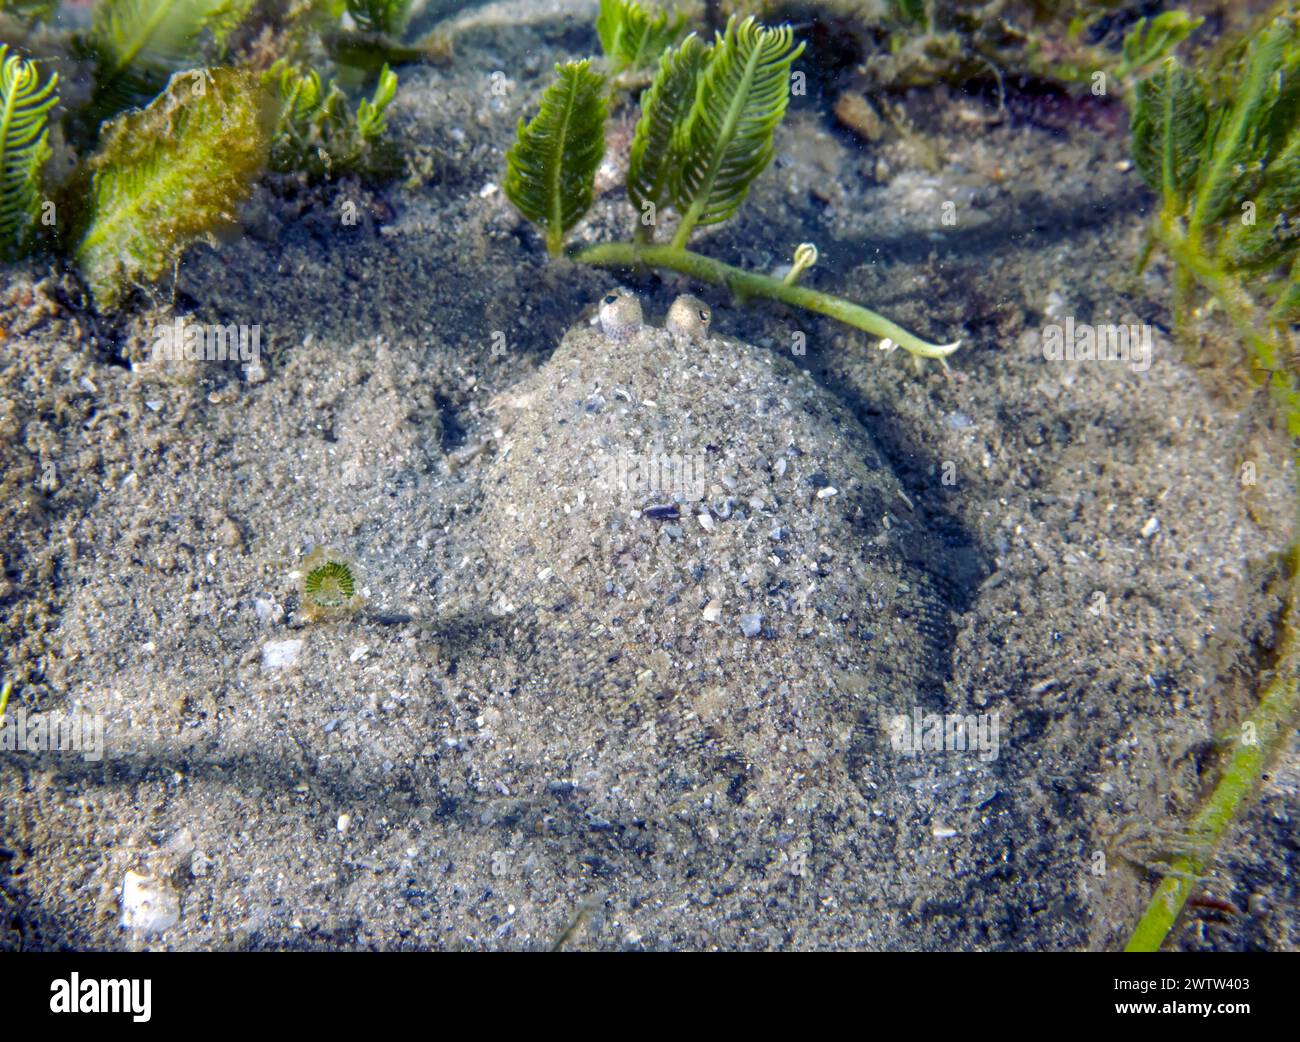 An Eyed Flounder (Bothus ocellatus) in Florida, USA Stock Photo